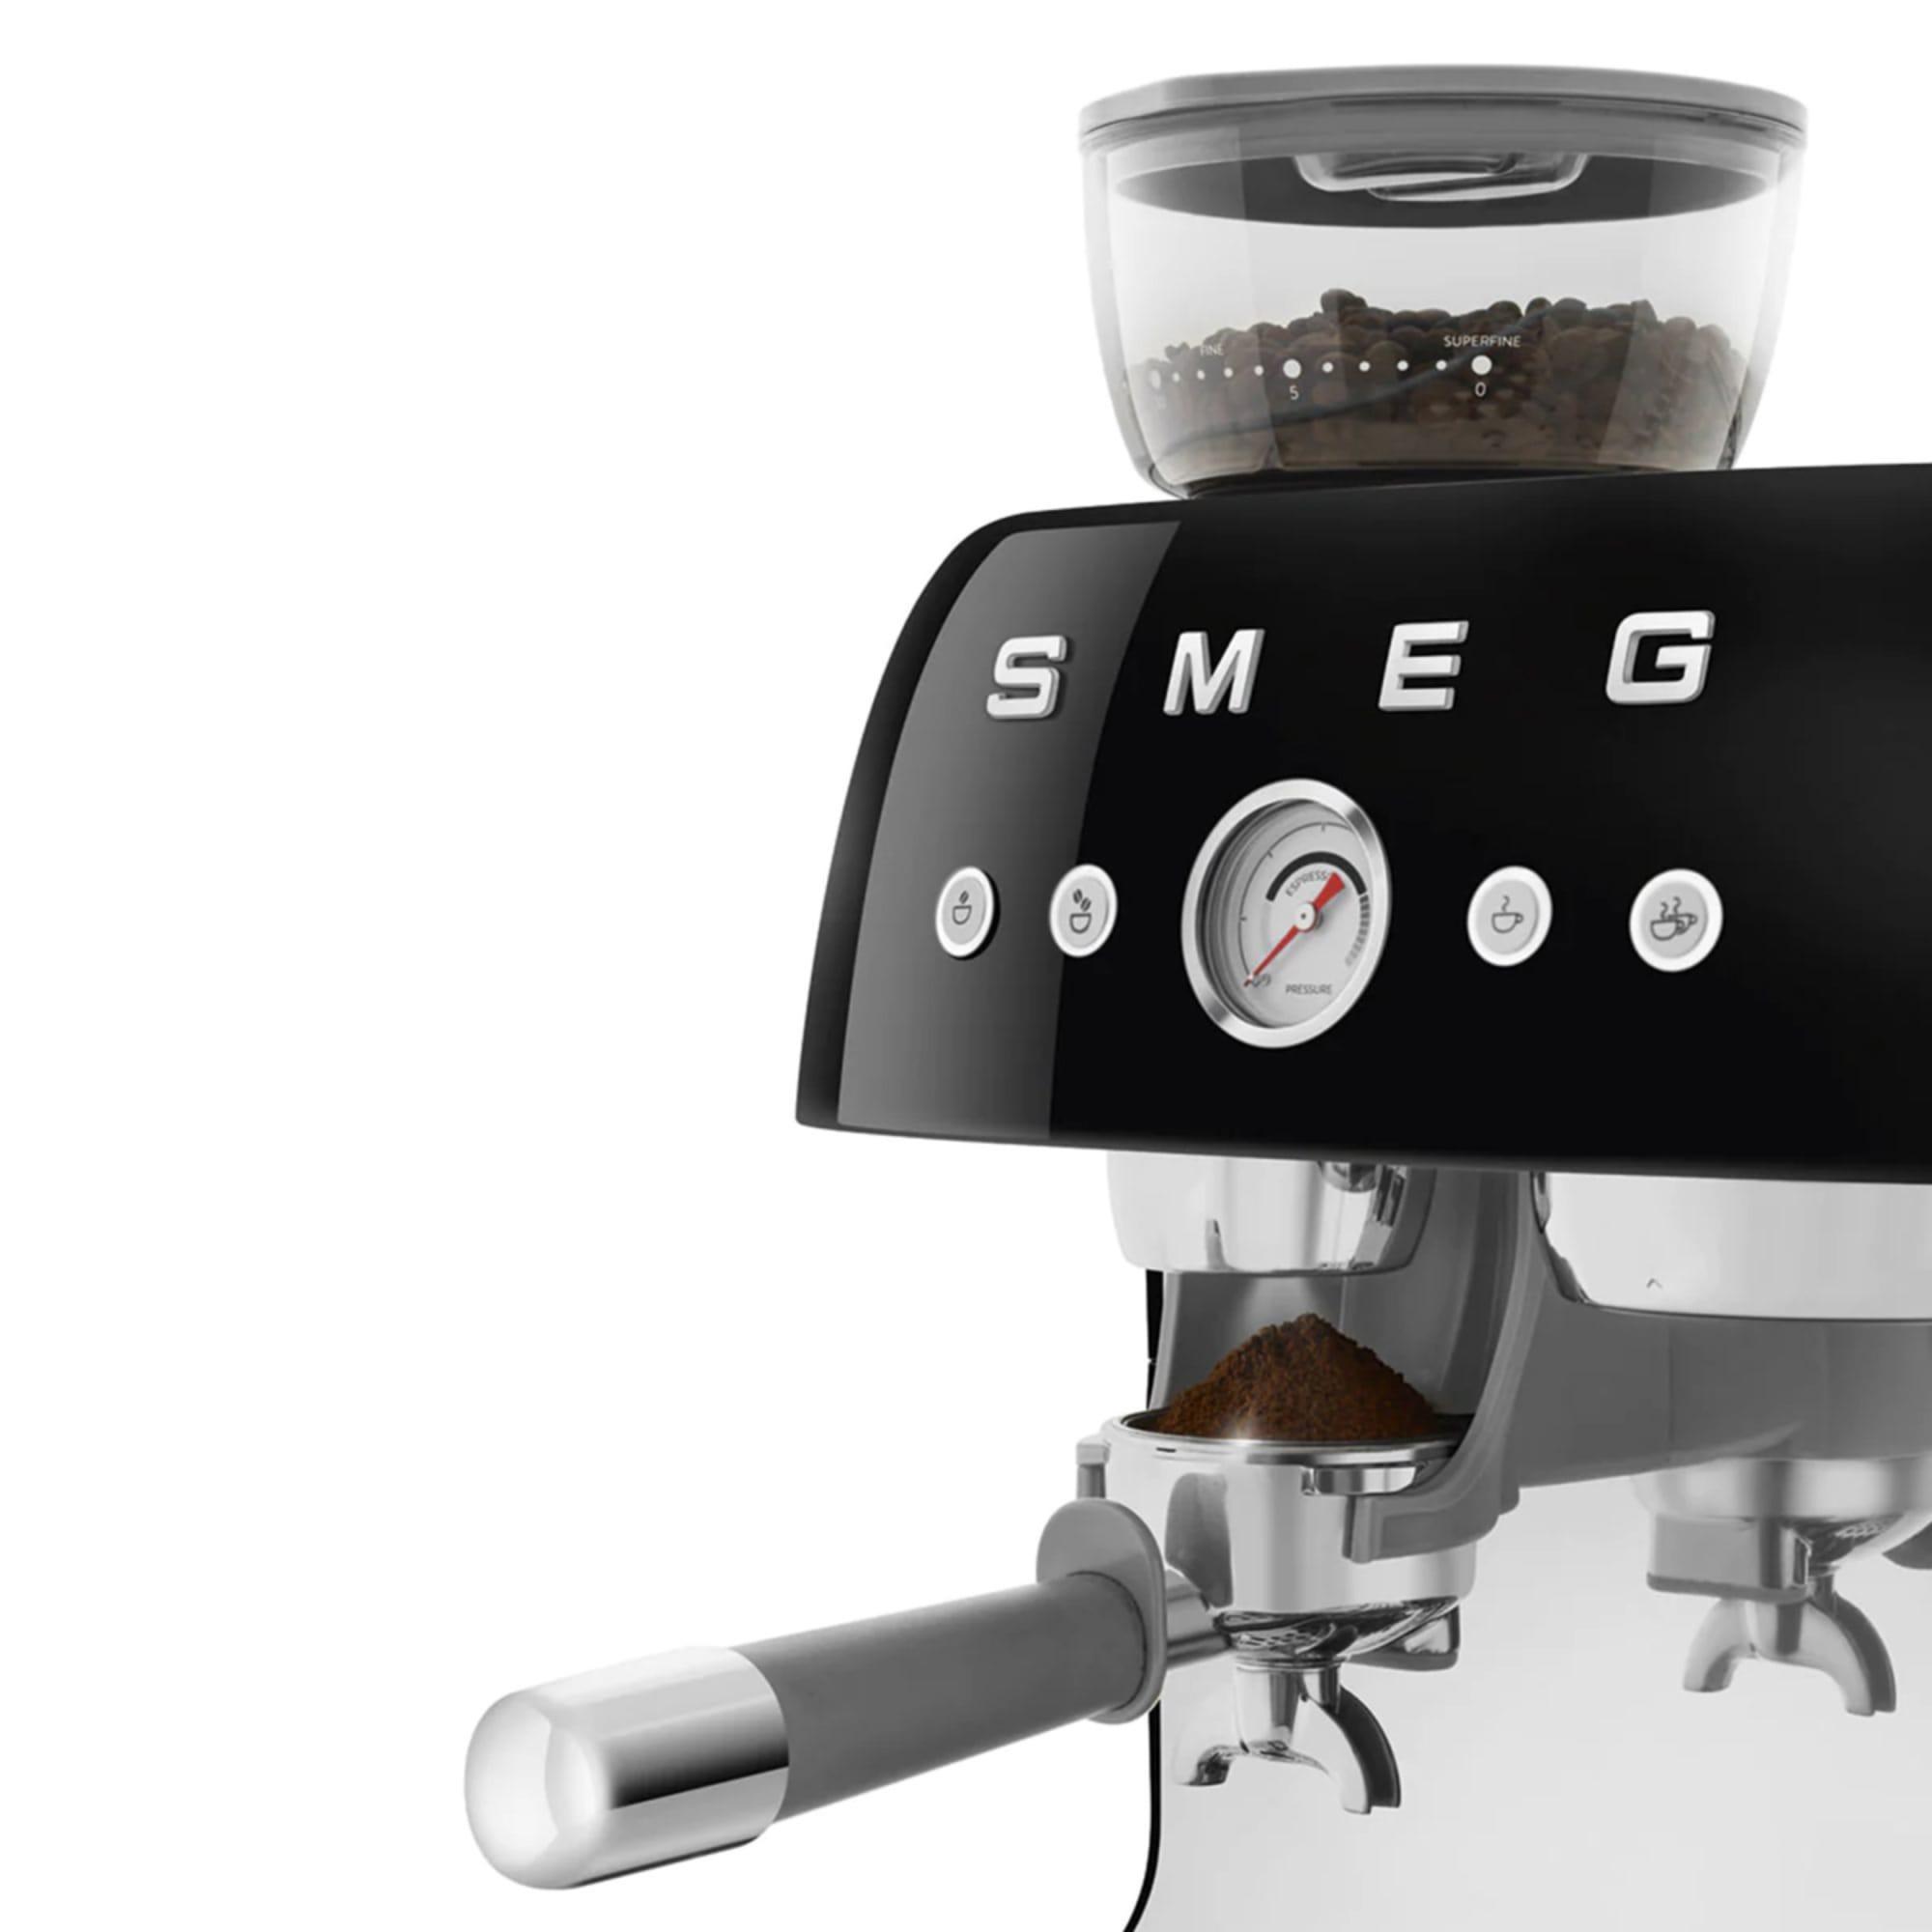 Smeg 50's Retro Style Espresso Machine with Built In Grinder Black Image 3